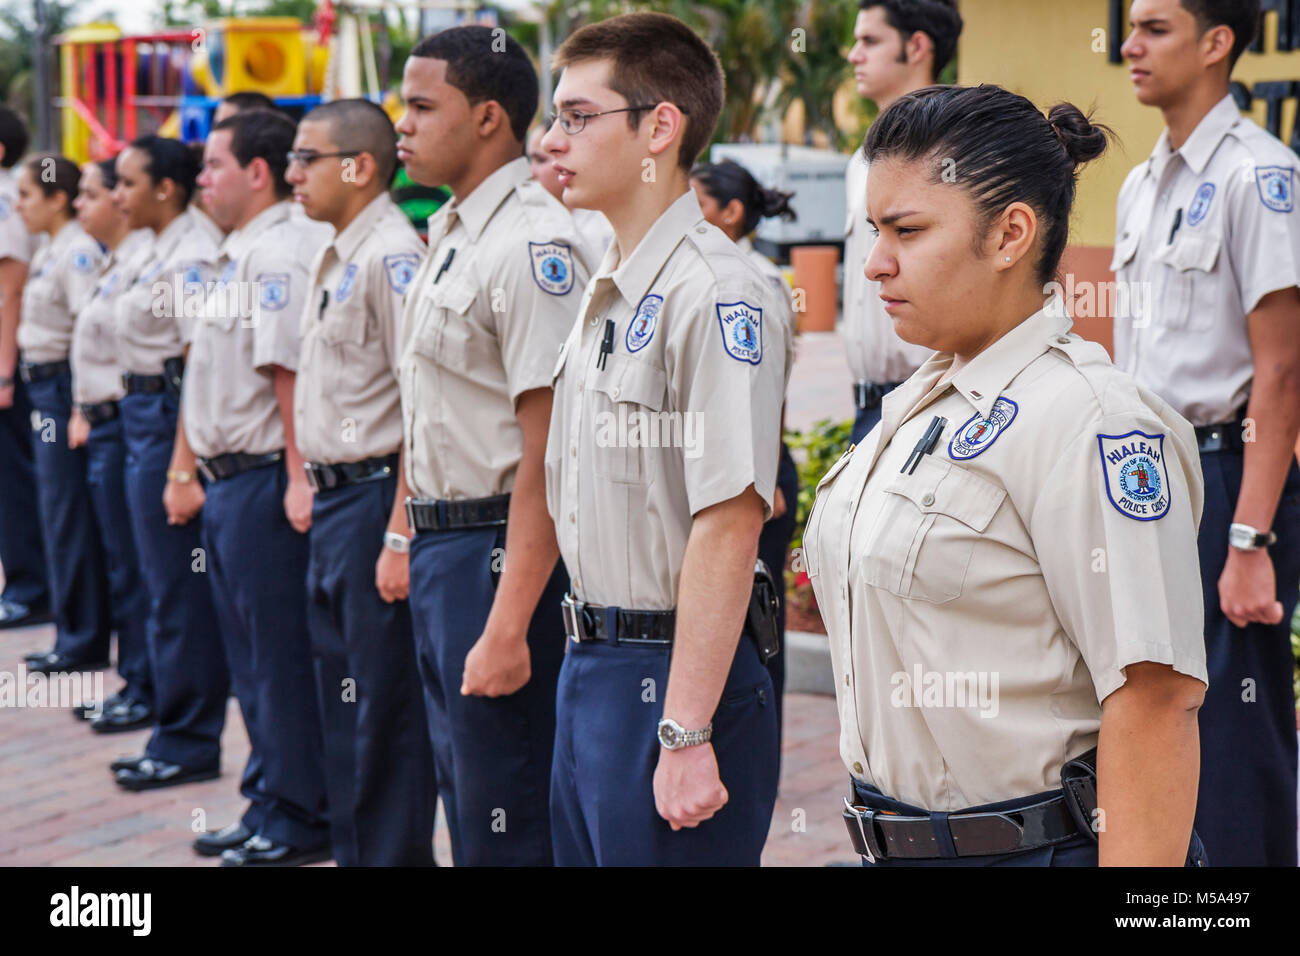 Miami Florida,Hialeah,Milander Park Hispanic police cadets,boys girls teen teens teenagers teenage uniforms discipline standing attention Stock Photo